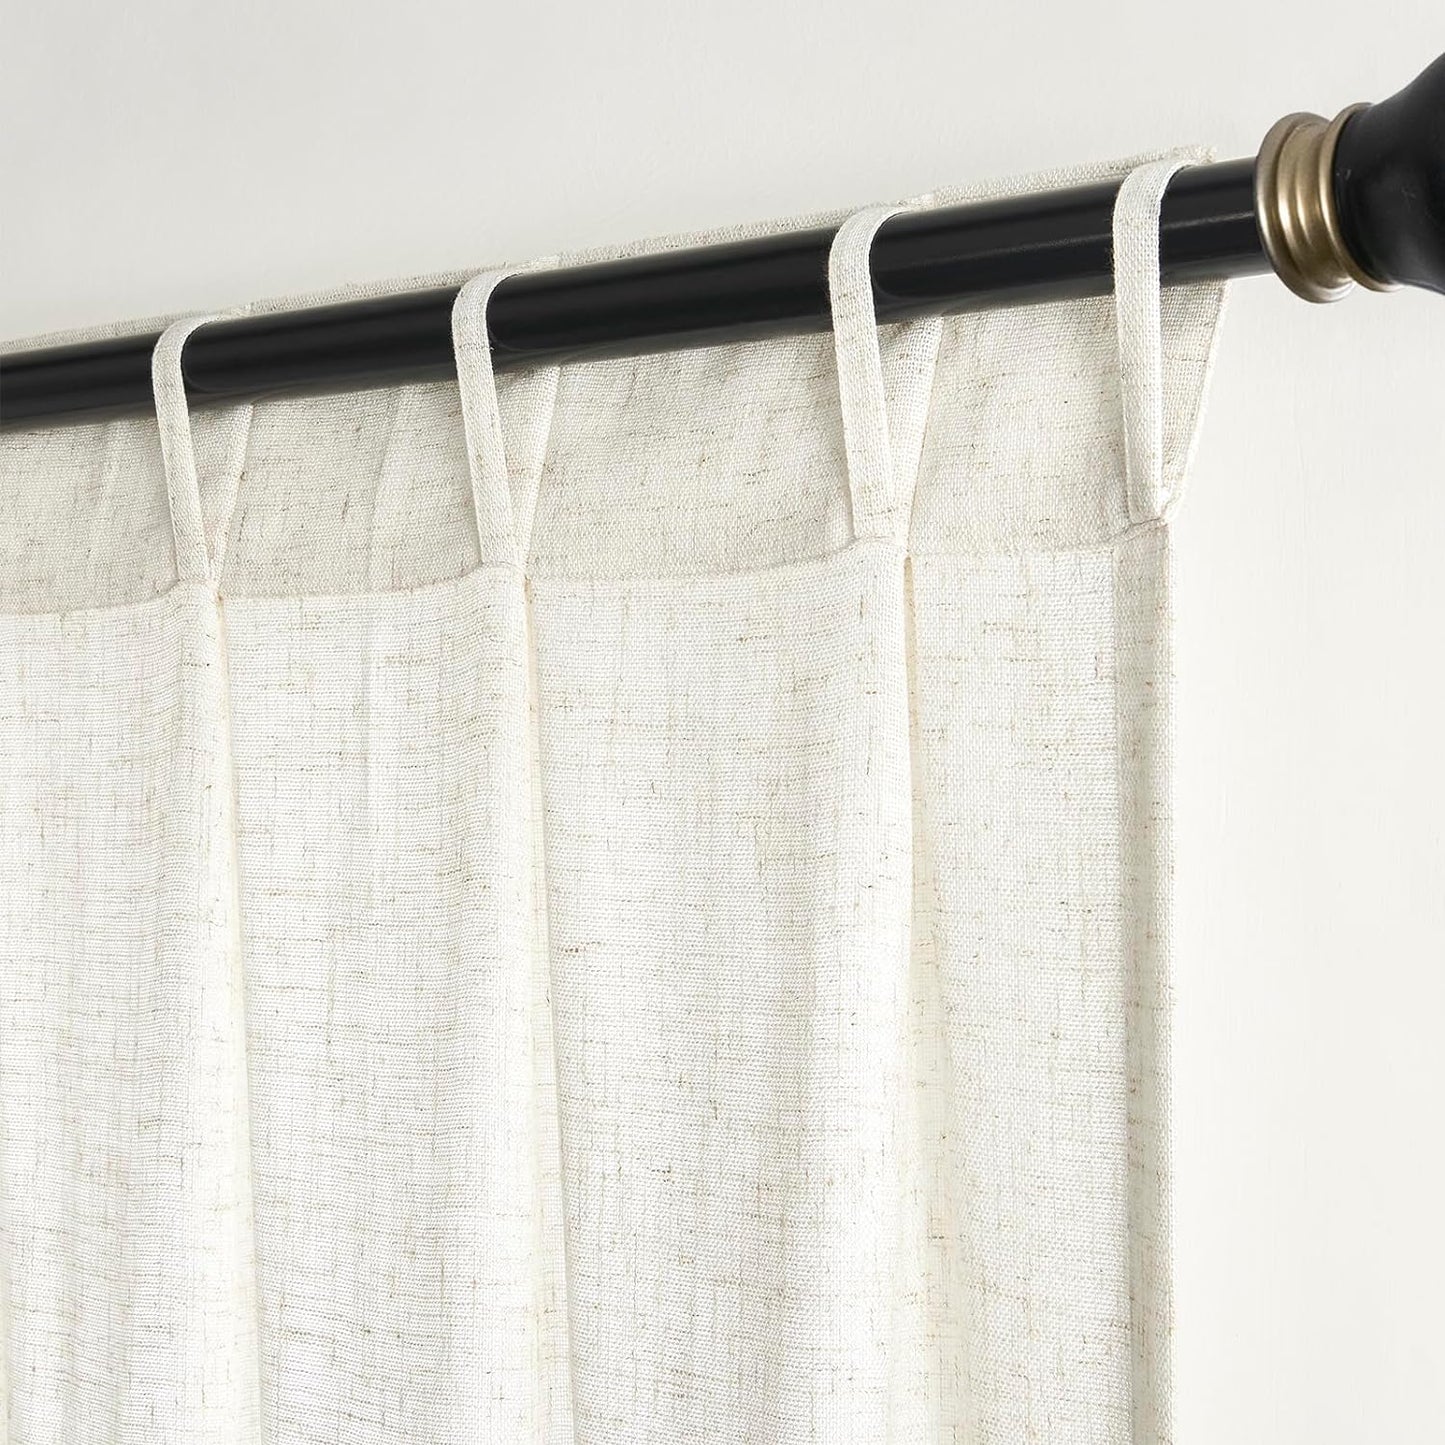 Maison Colette Pinch Pleat Natural Linen Sheer Curtain 95 Inches Long,Back Tab Stripe Transparent Voile Window Drapes for Bedroom/Living Room, 2 Panels,42" Width,Linen  Maison Colette Home   